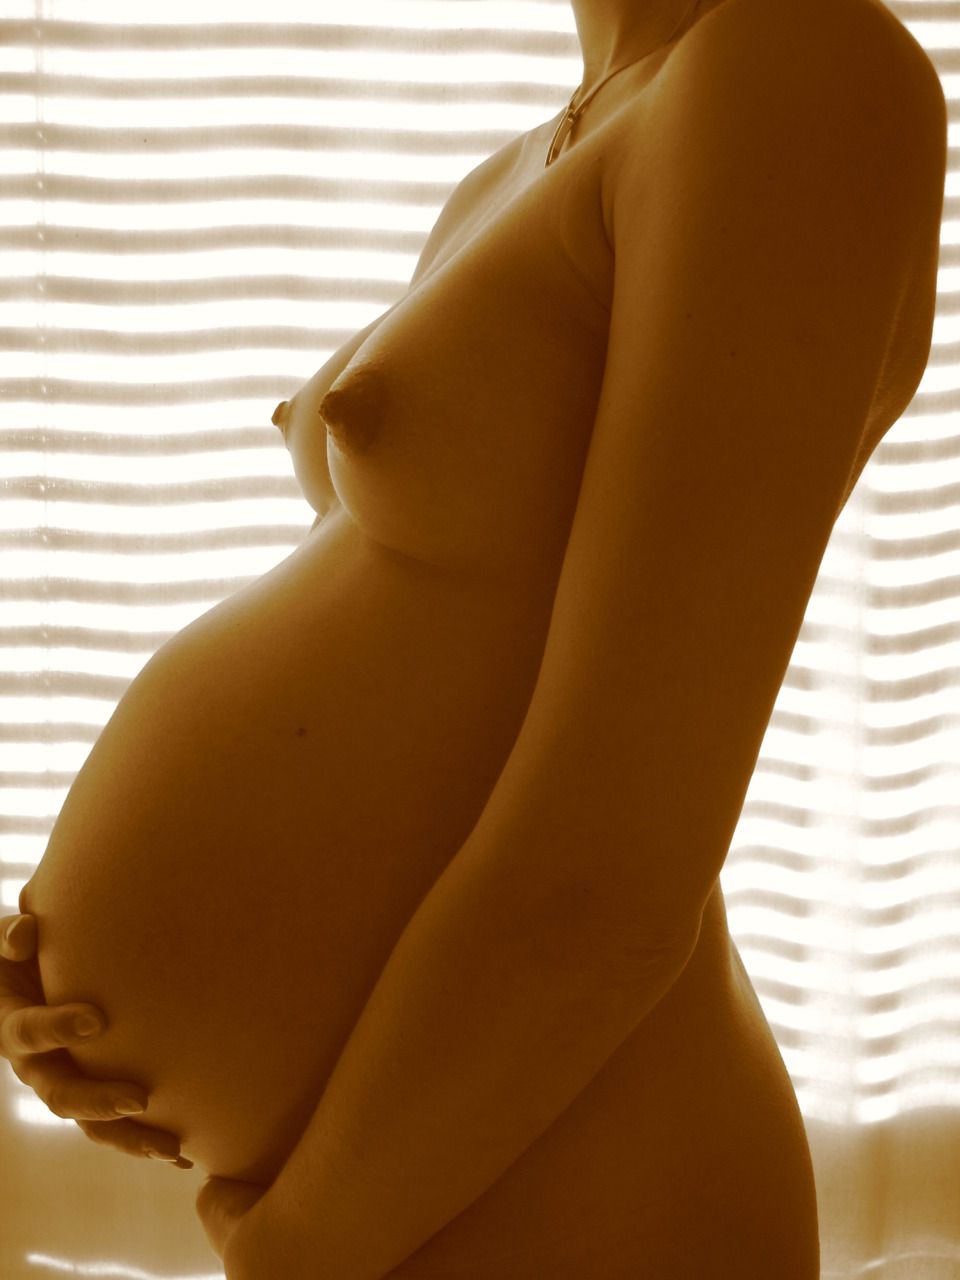 Geil schwanger pregnant (10)